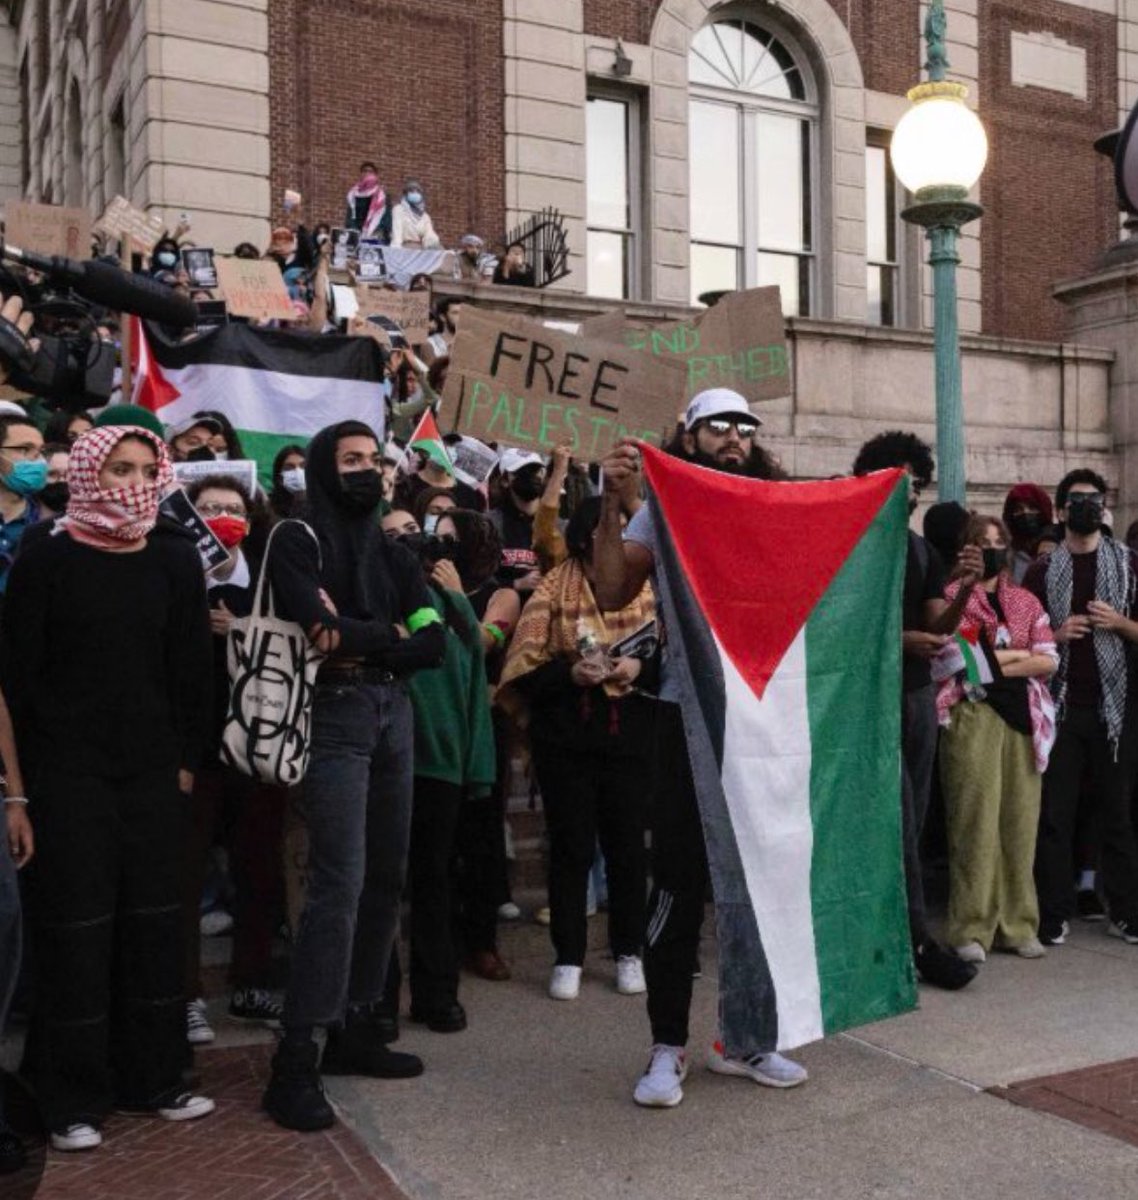 𝟏𝟗𝟑𝟖 Nazi’s block Jewish students from entering Vienna University. 𝟐𝟎𝟐𝟒 Palestinian activists block Jewish students from entering Columbia University.